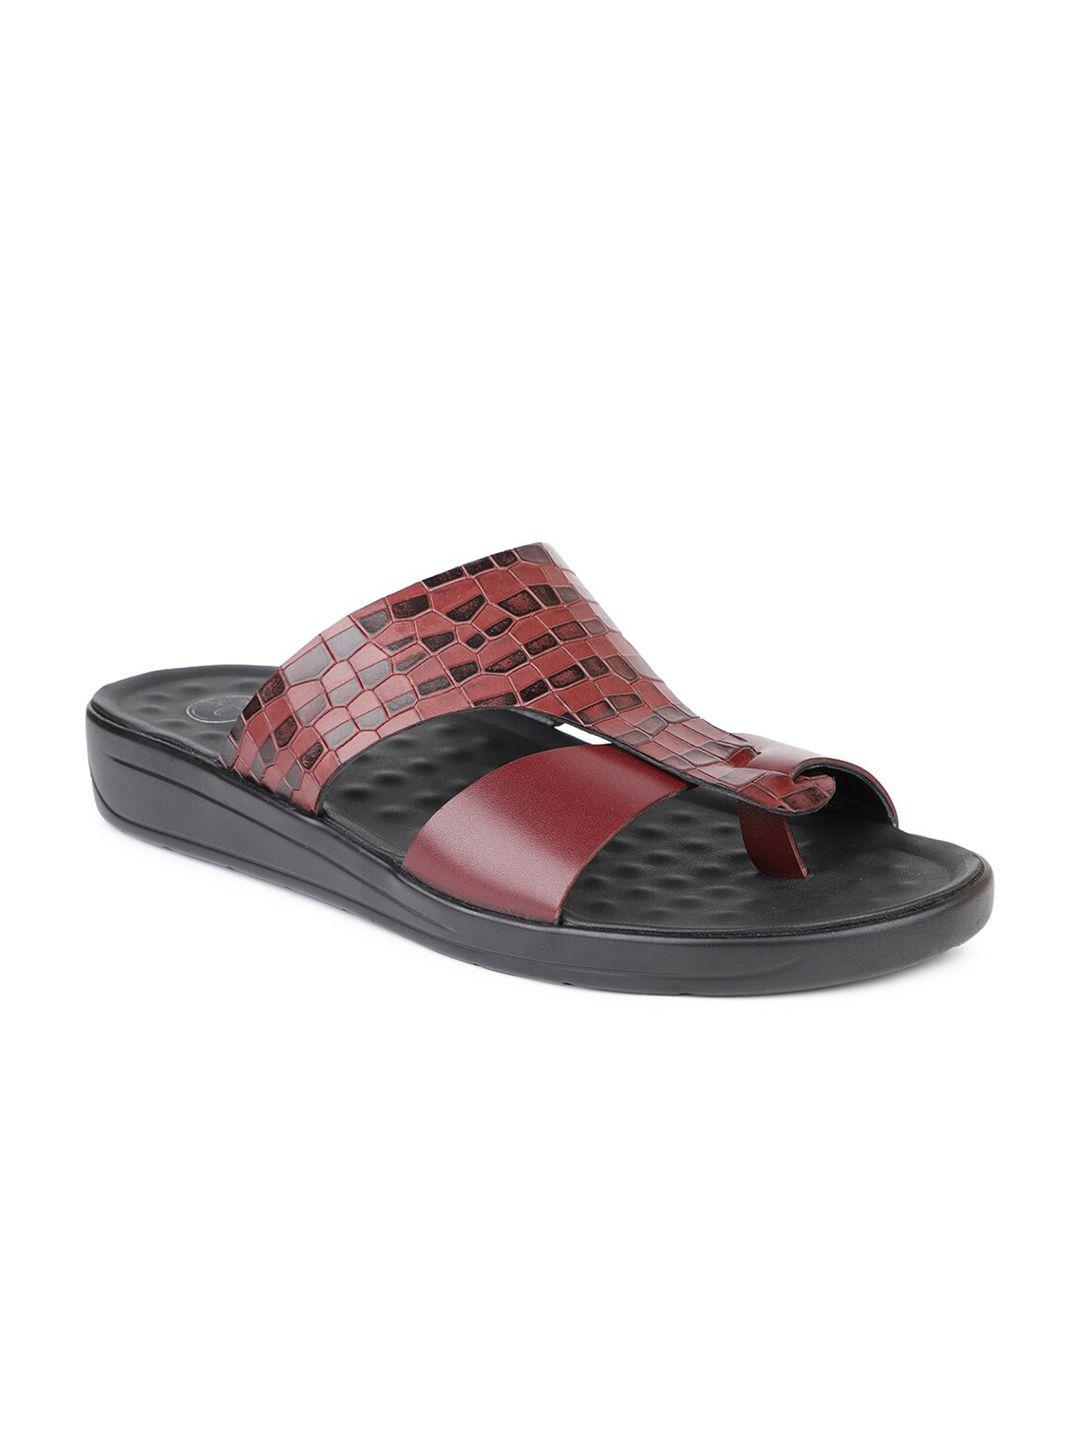 privo-men-maroon-&-black-leather-comfort-sandals